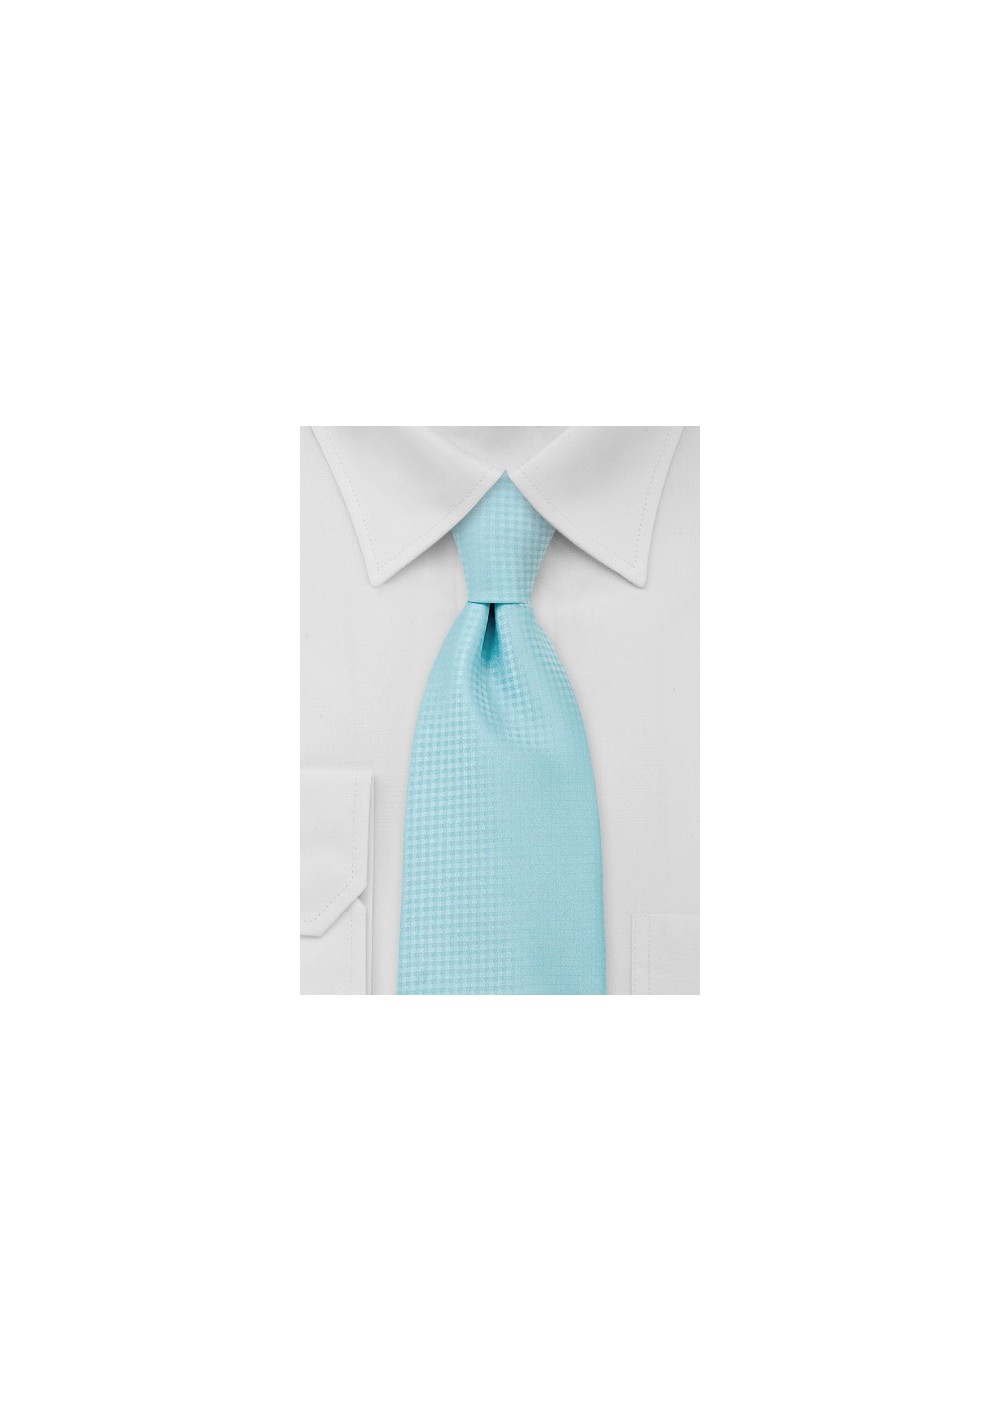 Electric Blue XL Sized Necktie